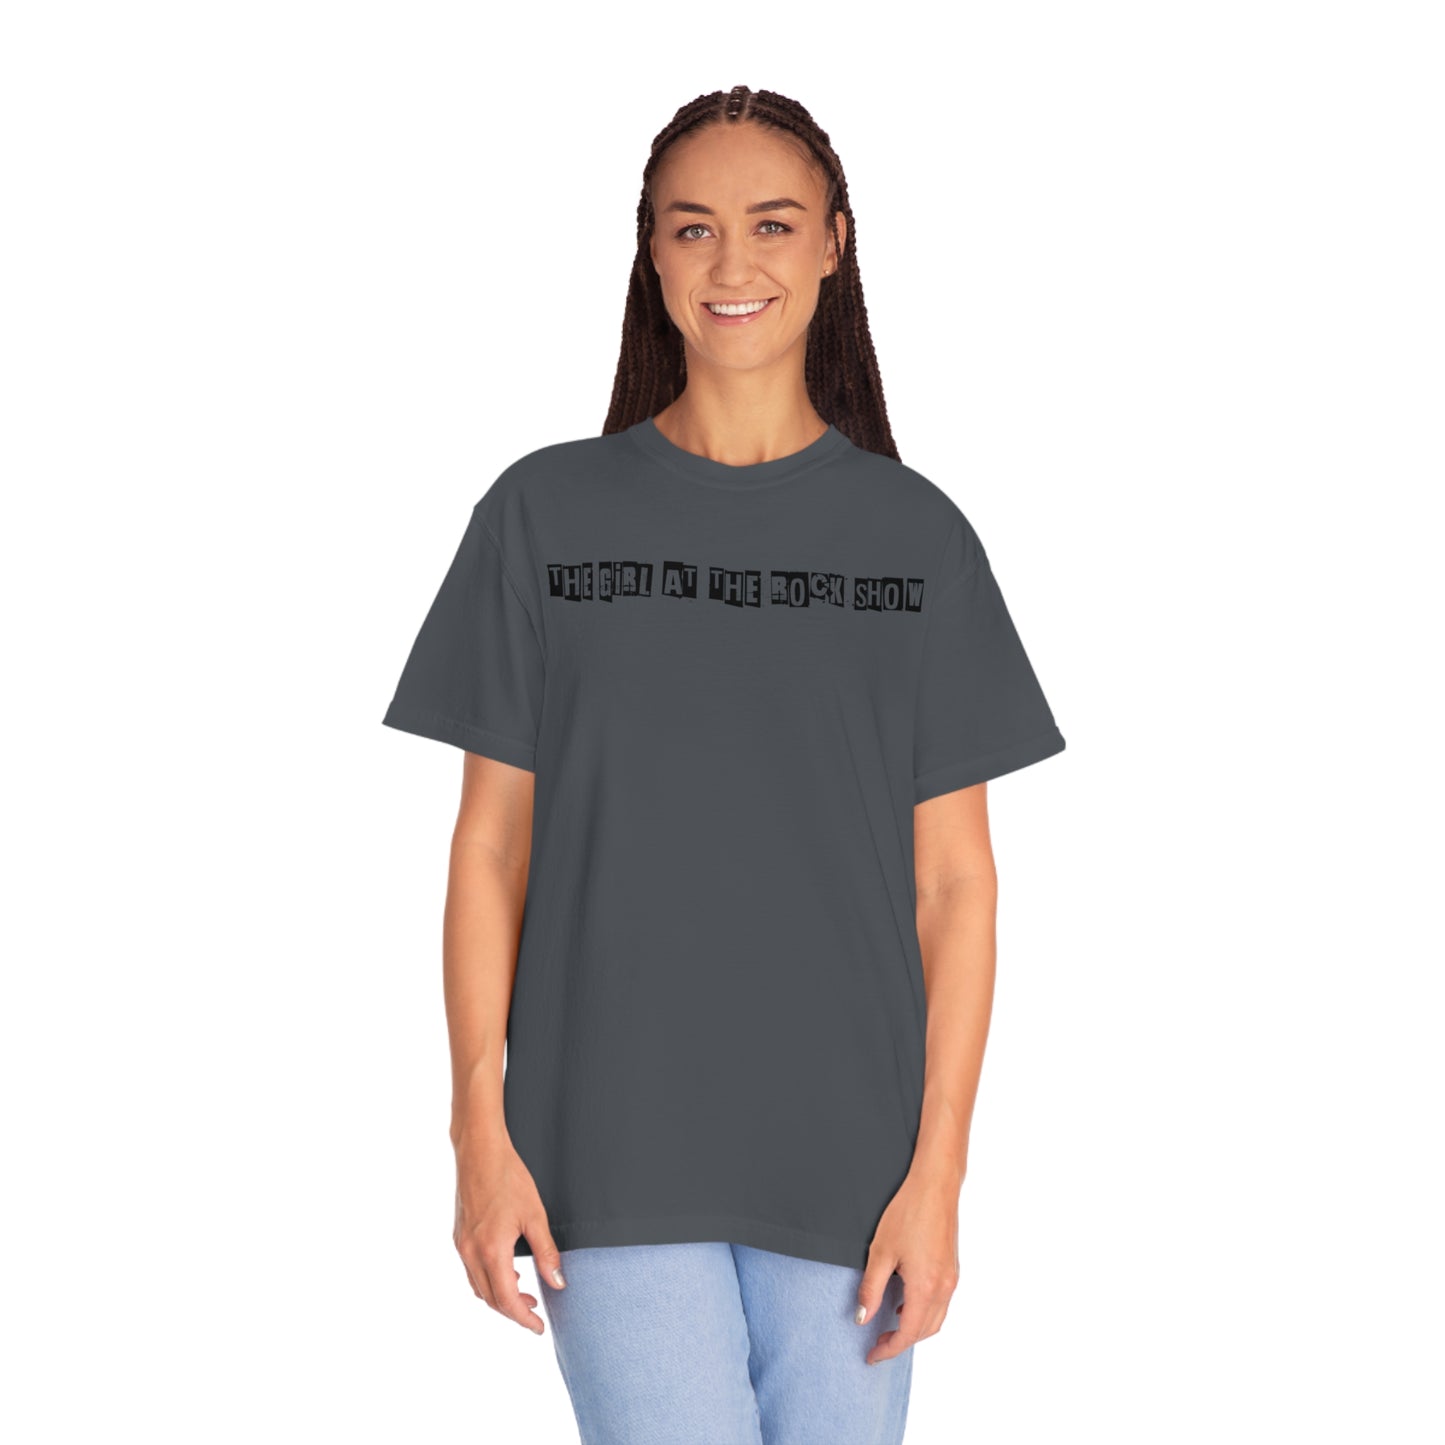 The Girl @ the rock show V2 Unisex Garment-Dyed T-shirt